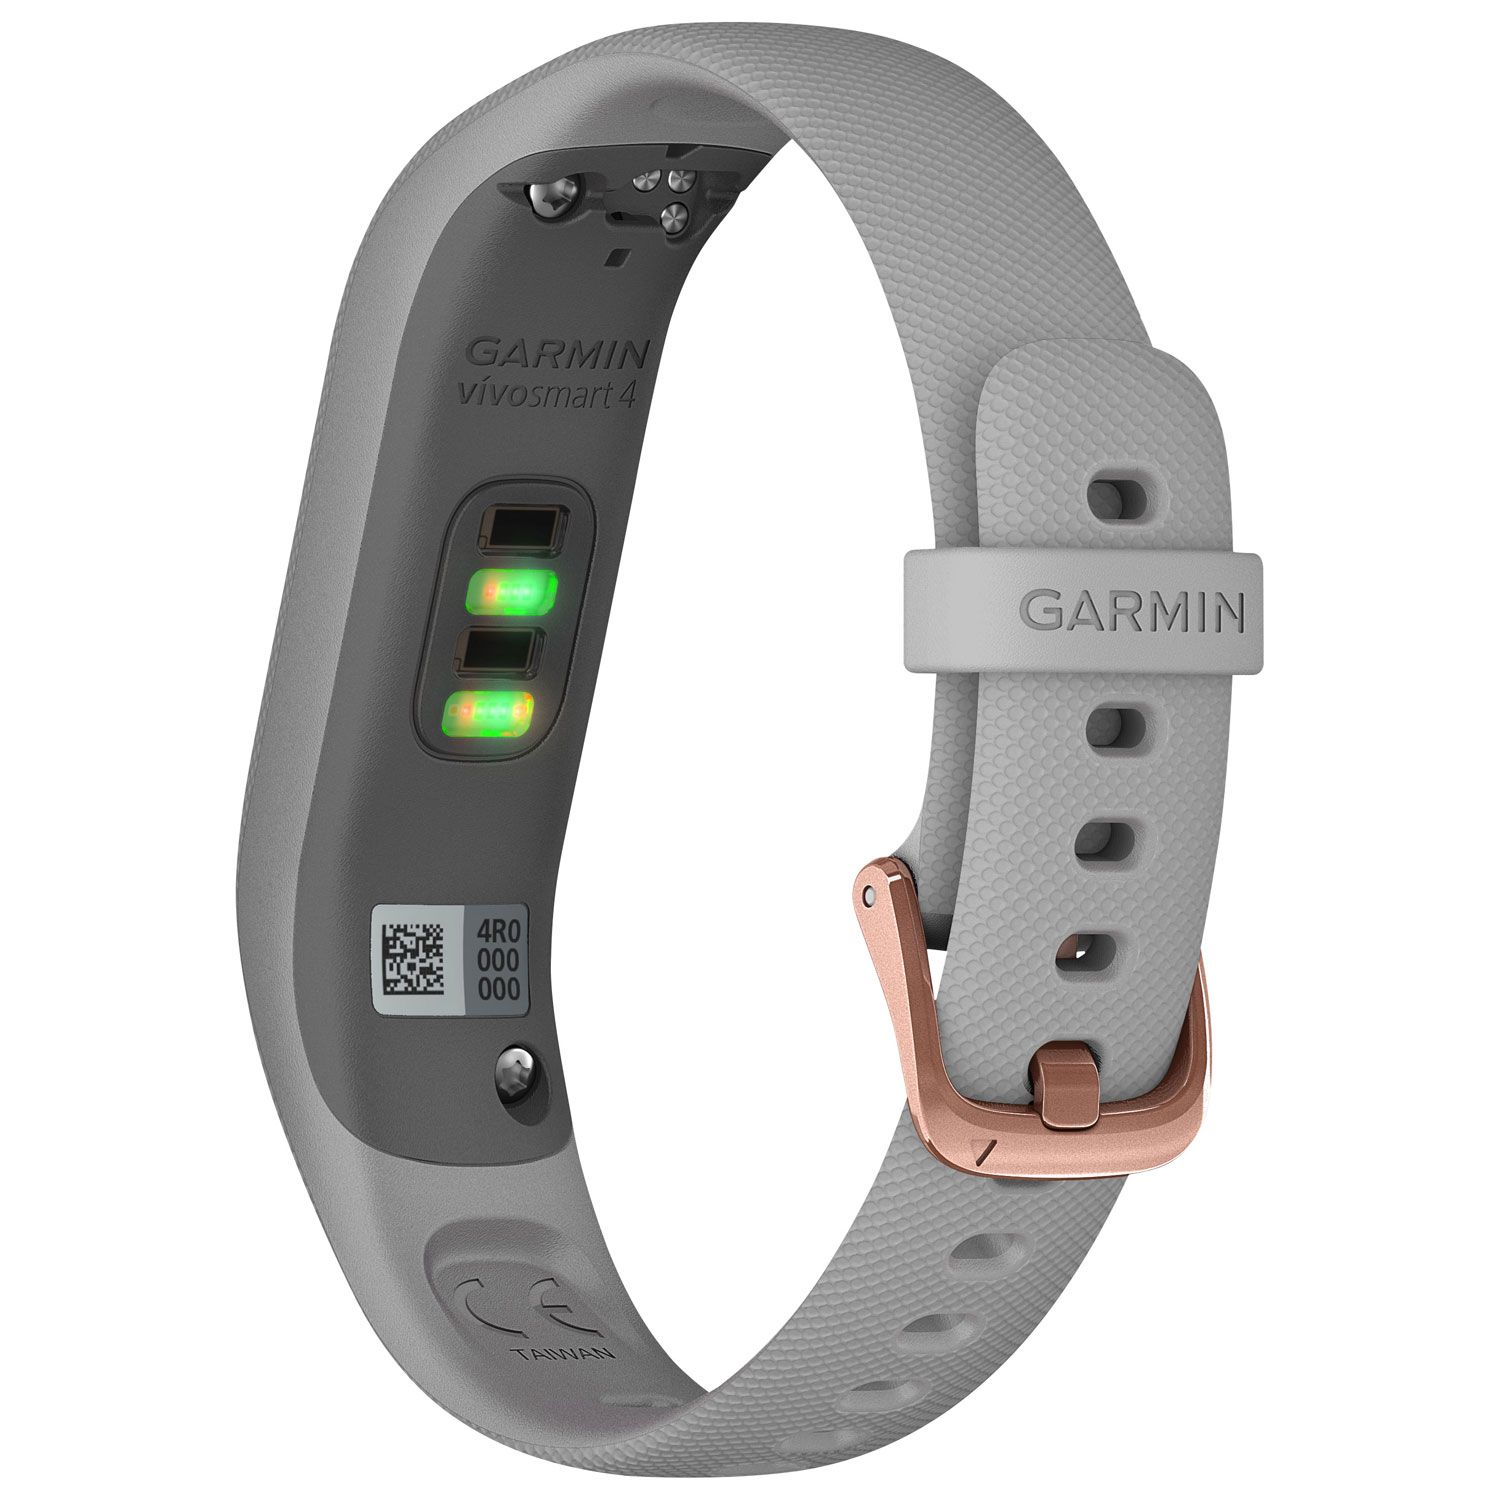 Garmin vivosmart 4 Fitness Tracker with Heart Rate Monitor